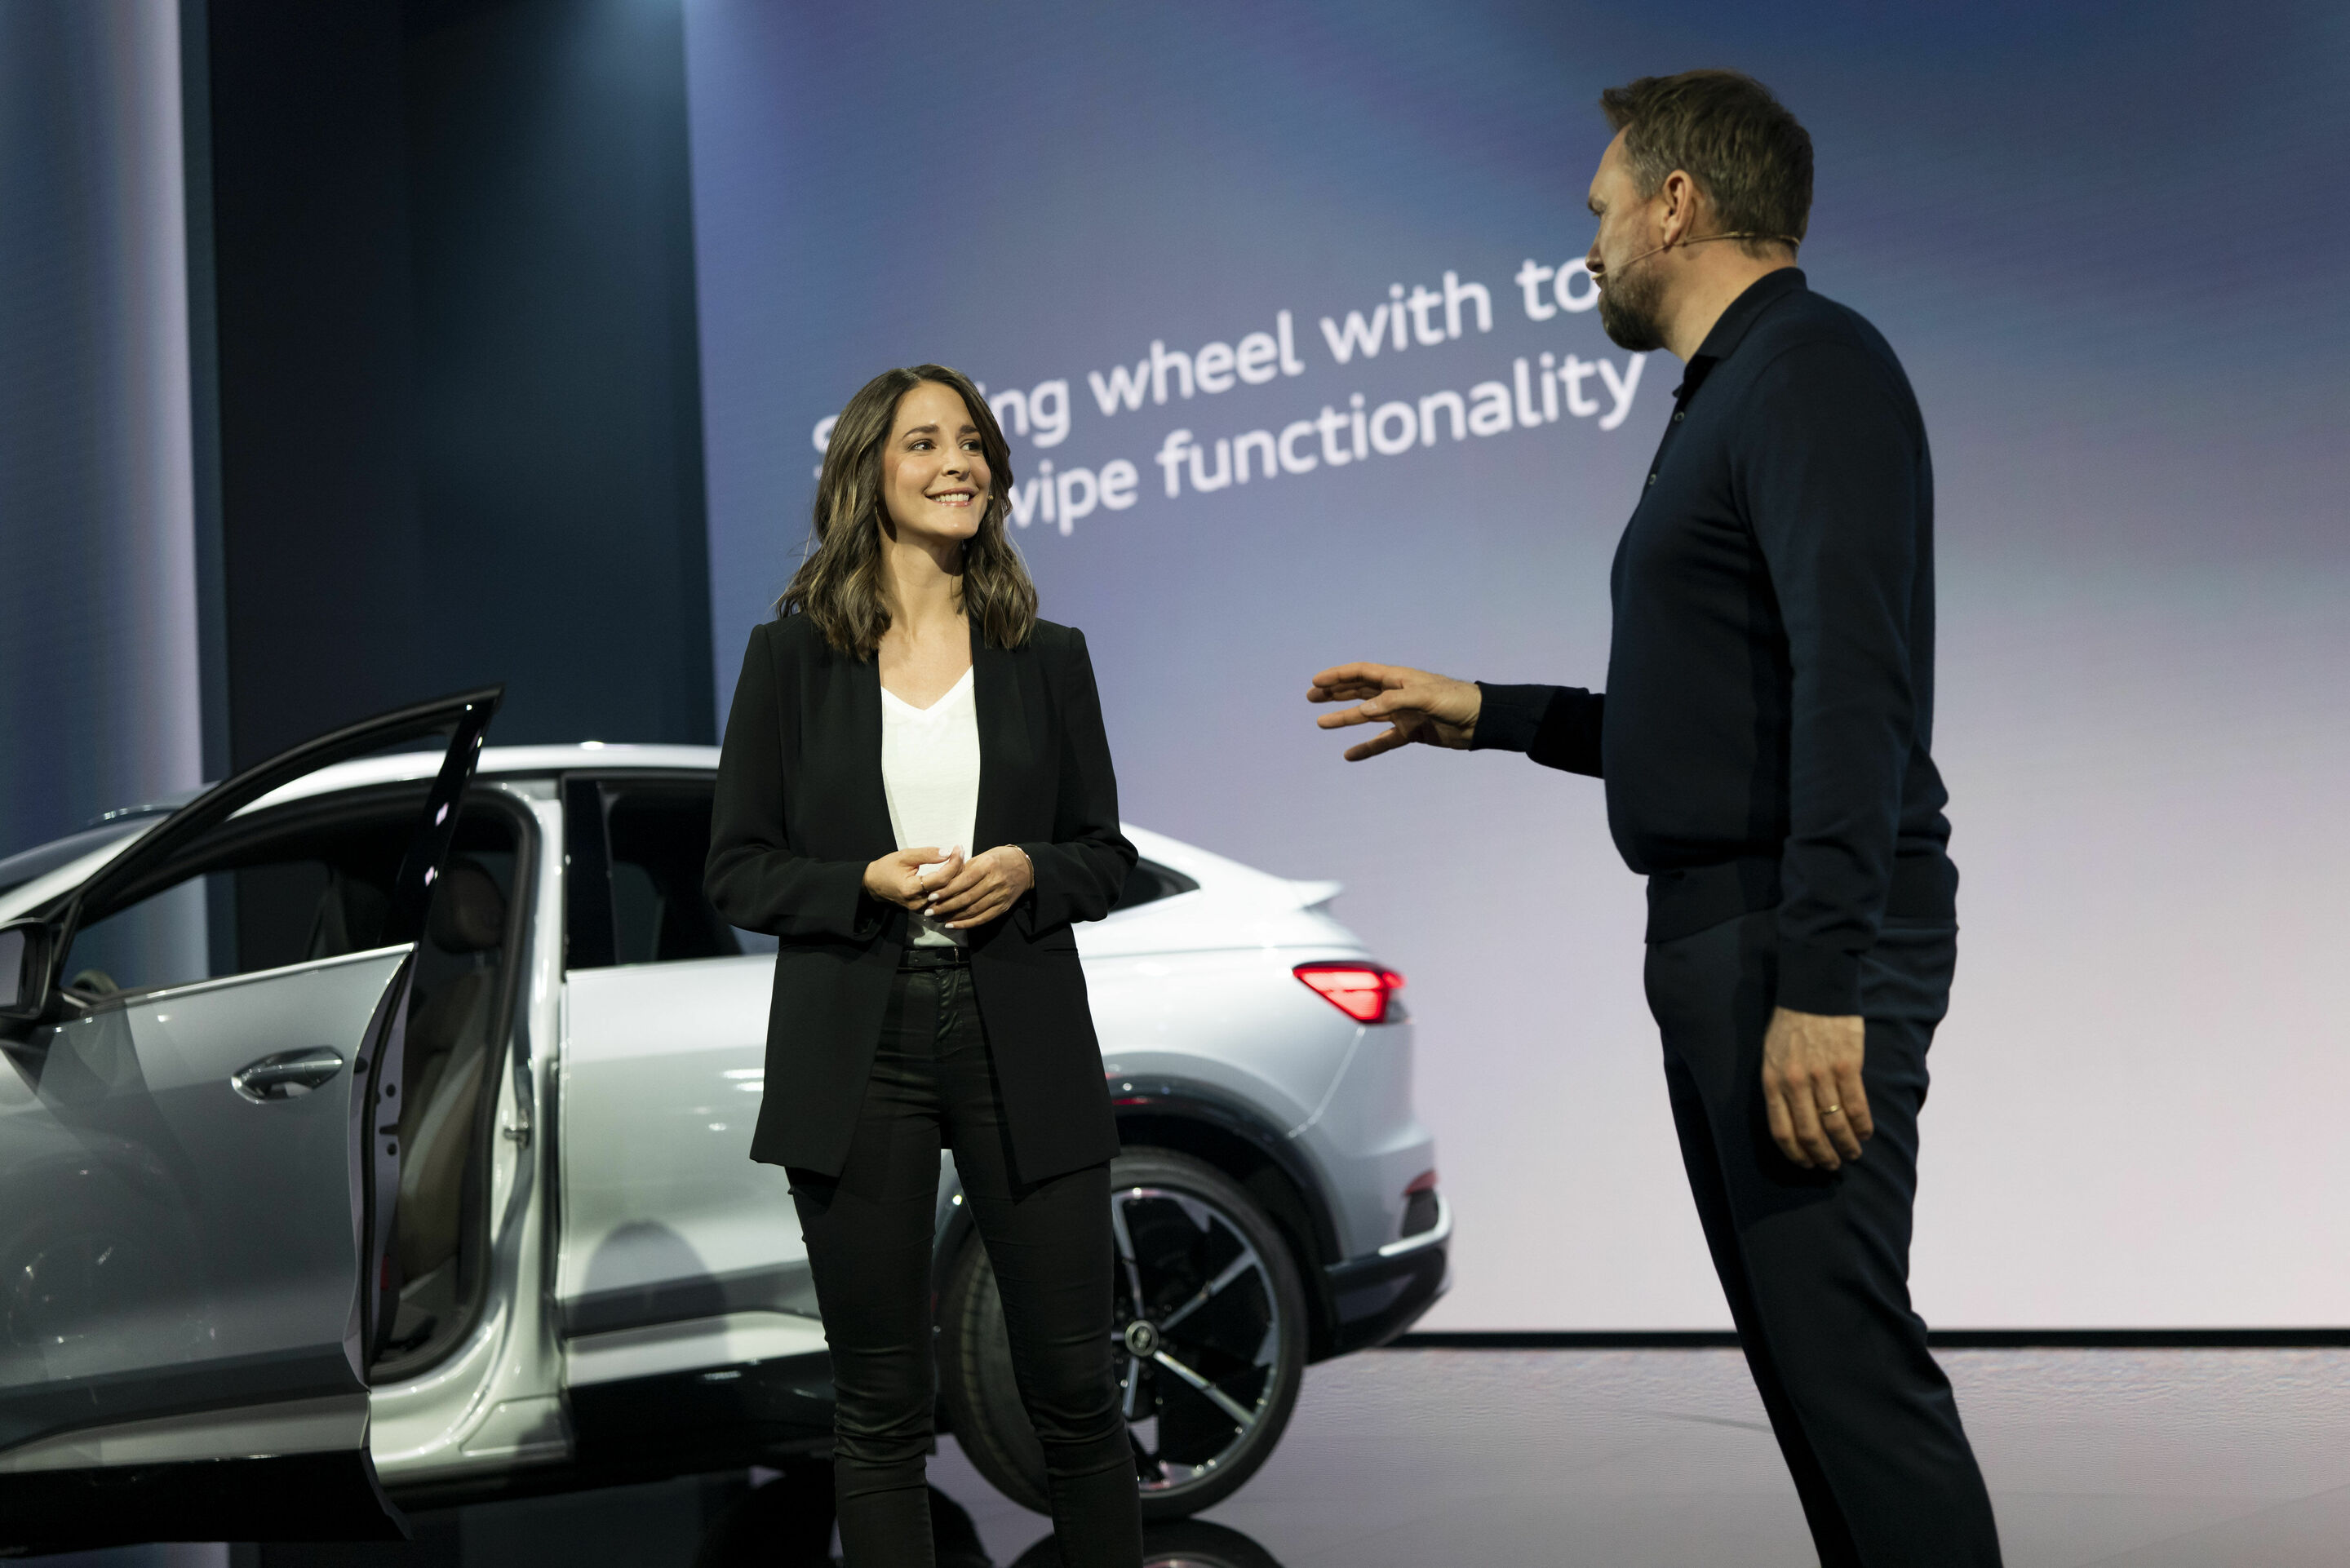 Weltpremiere Audi Q4 e-tron: Celebration of Progress